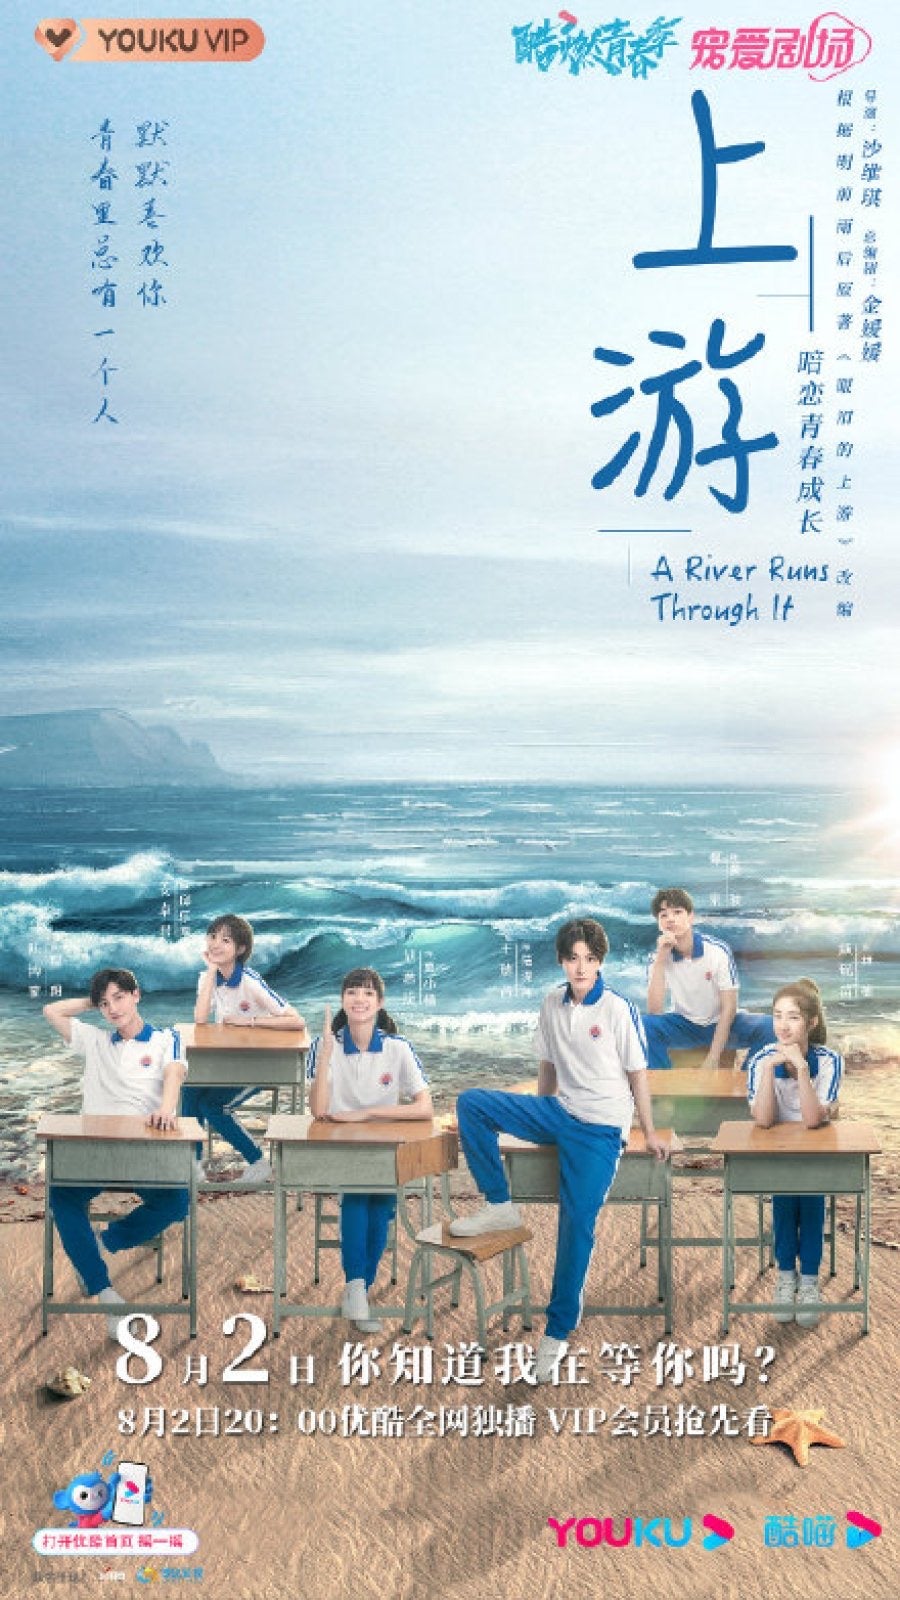 TV ratings for A River Runs Through It (上游) in Australia. Youku TV series